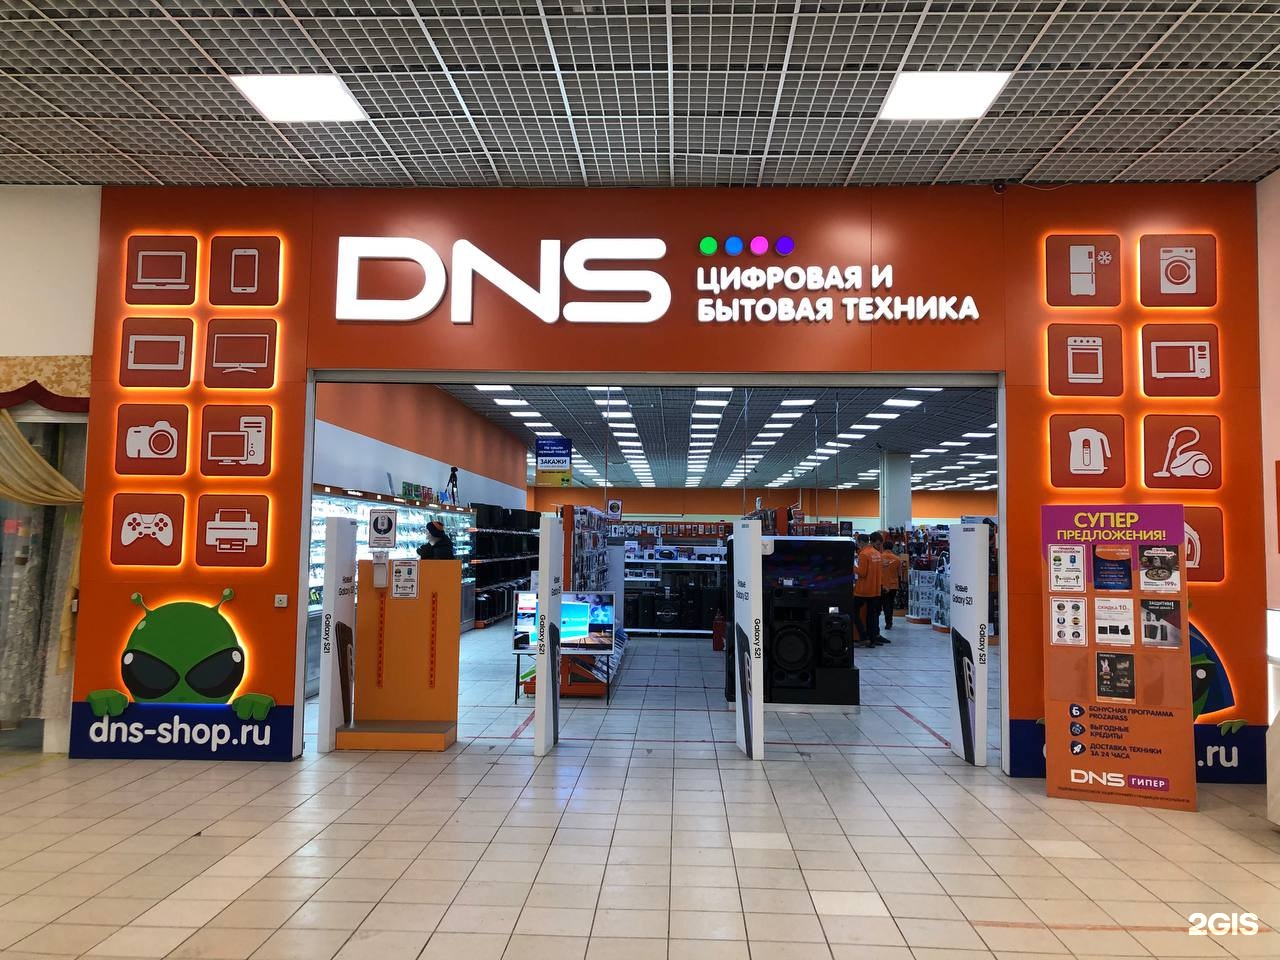 DNS сервисный центр